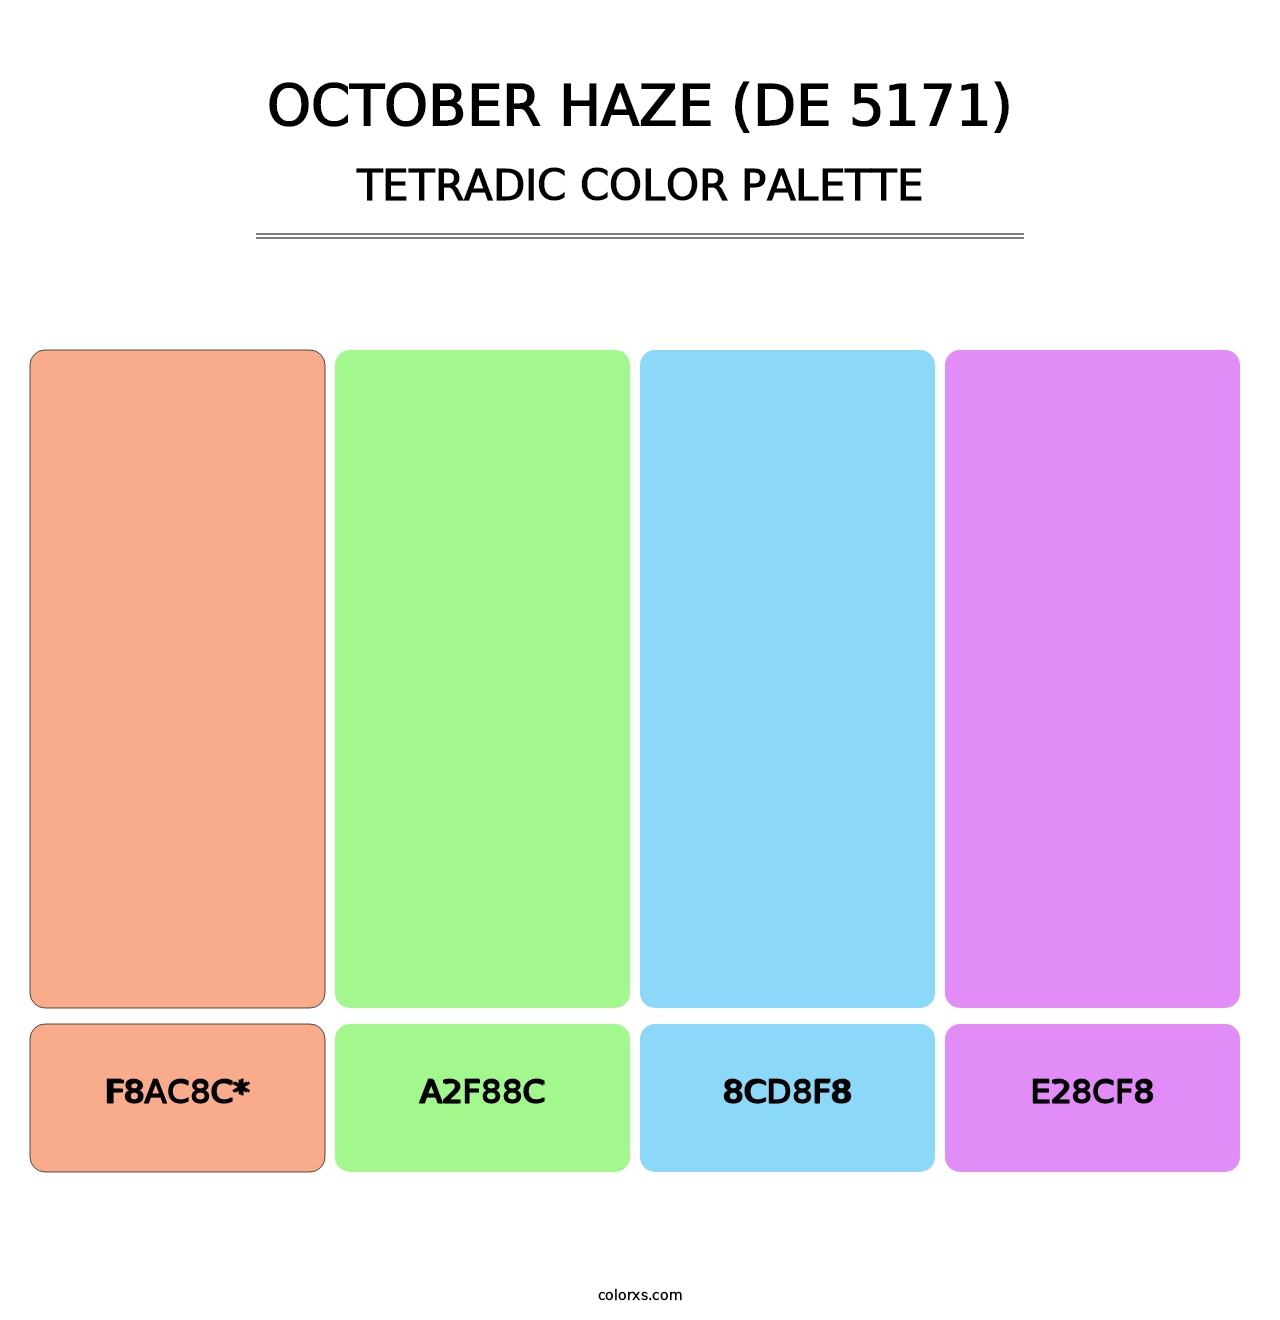 October Haze (DE 5171) - Tetradic Color Palette